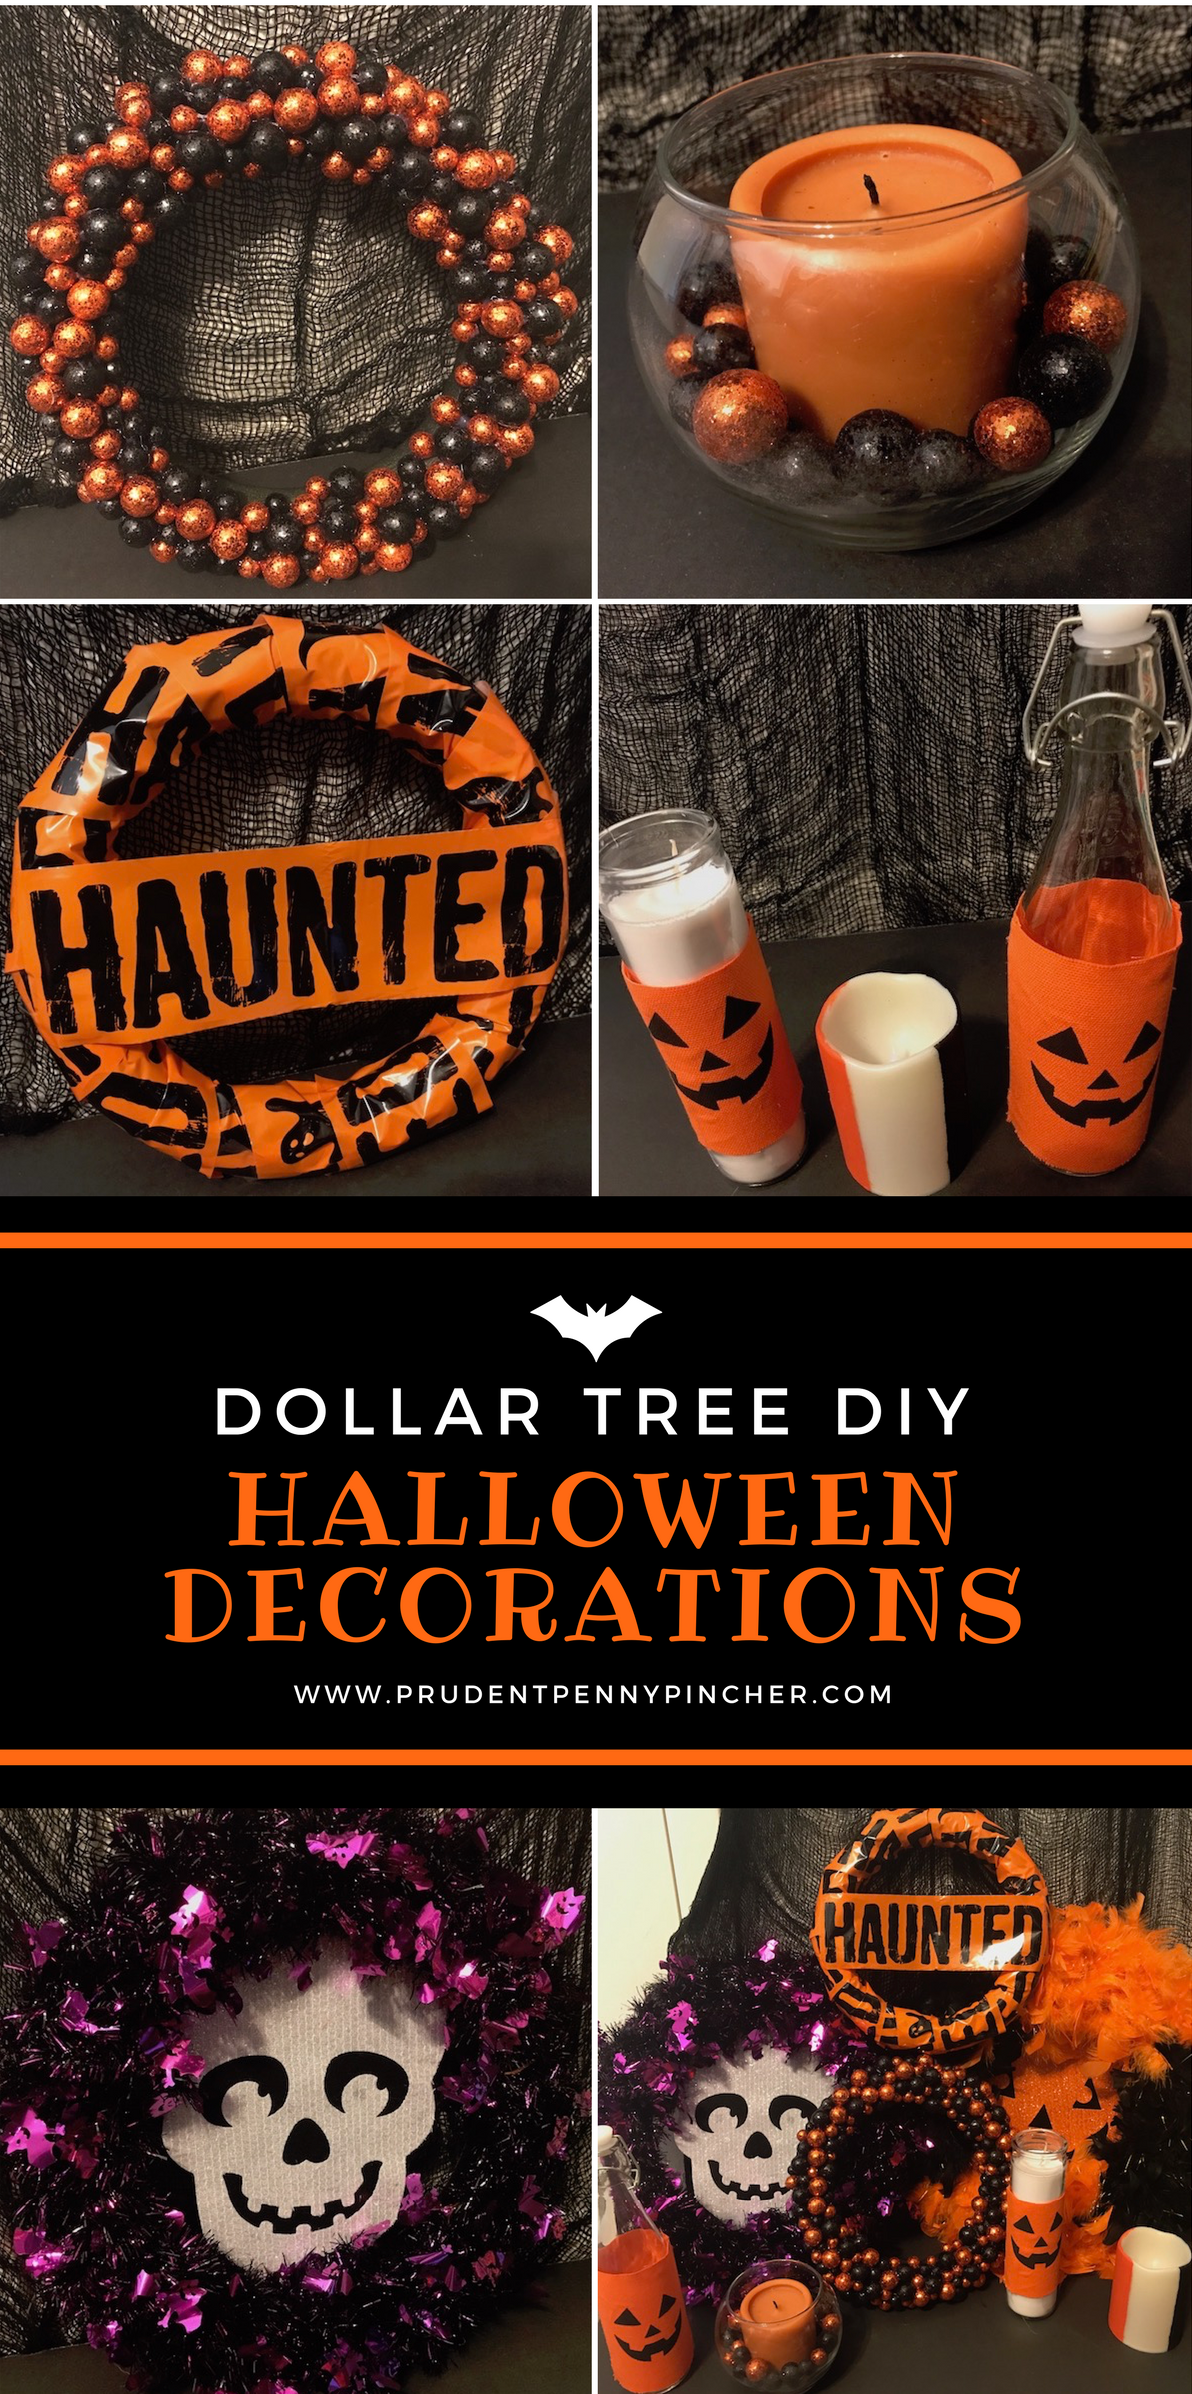 Dollar Tree Halloween Decorations Prudent Penny Pincher